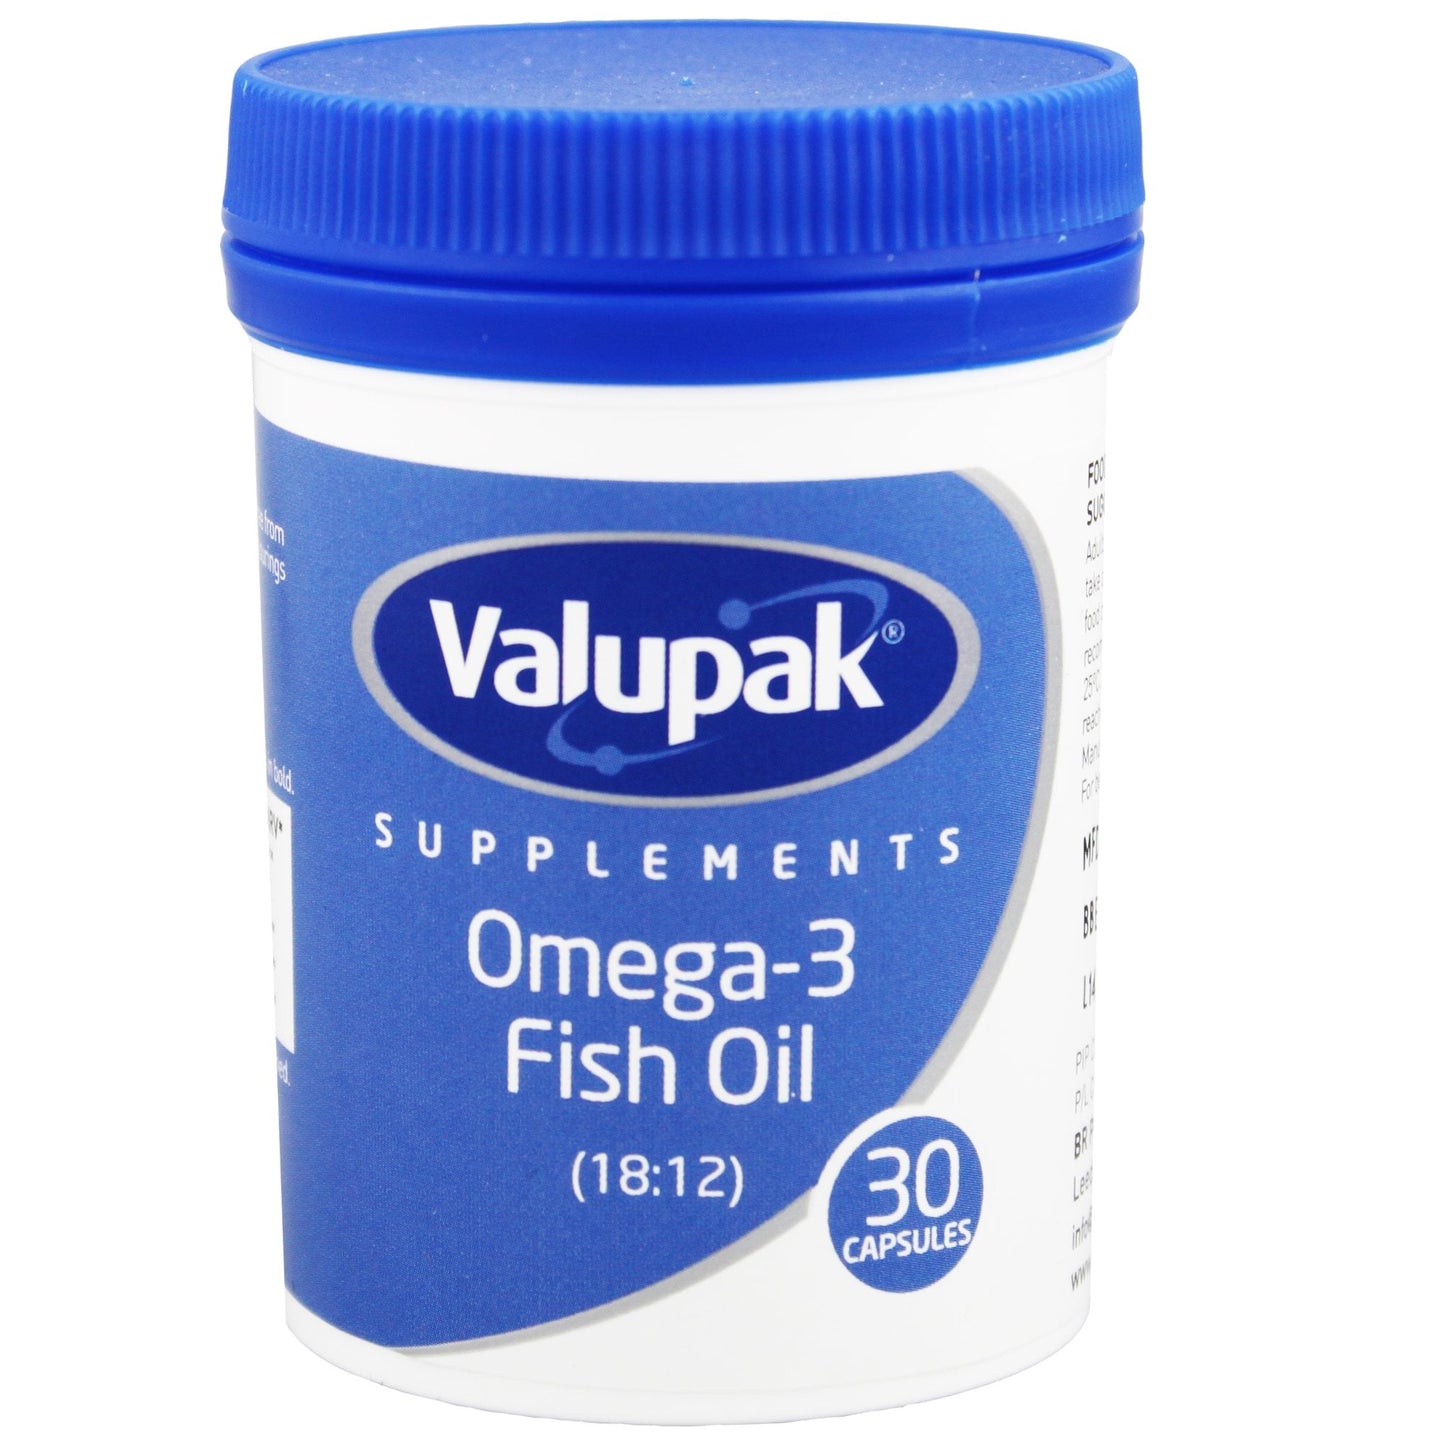 VALUPAK OMEGA-3 FISH OIL CAPSULES